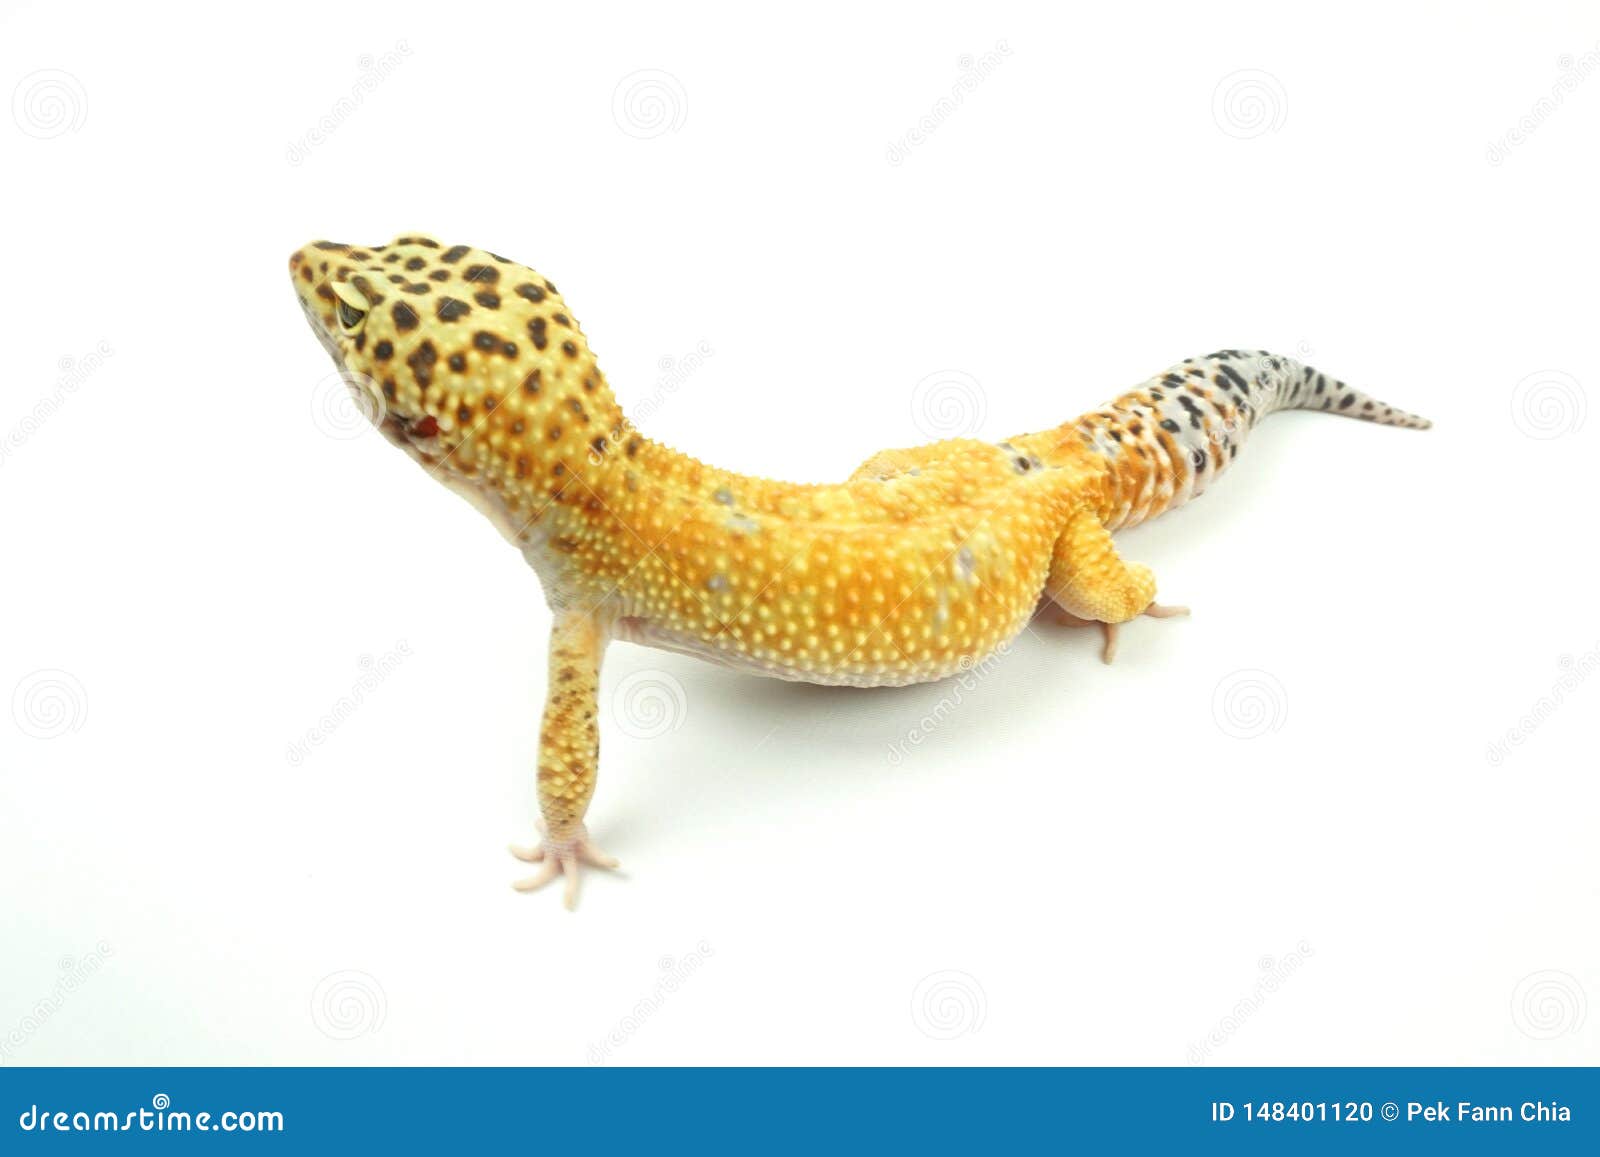 hypo tangerine carrot tail leopard gecko 05